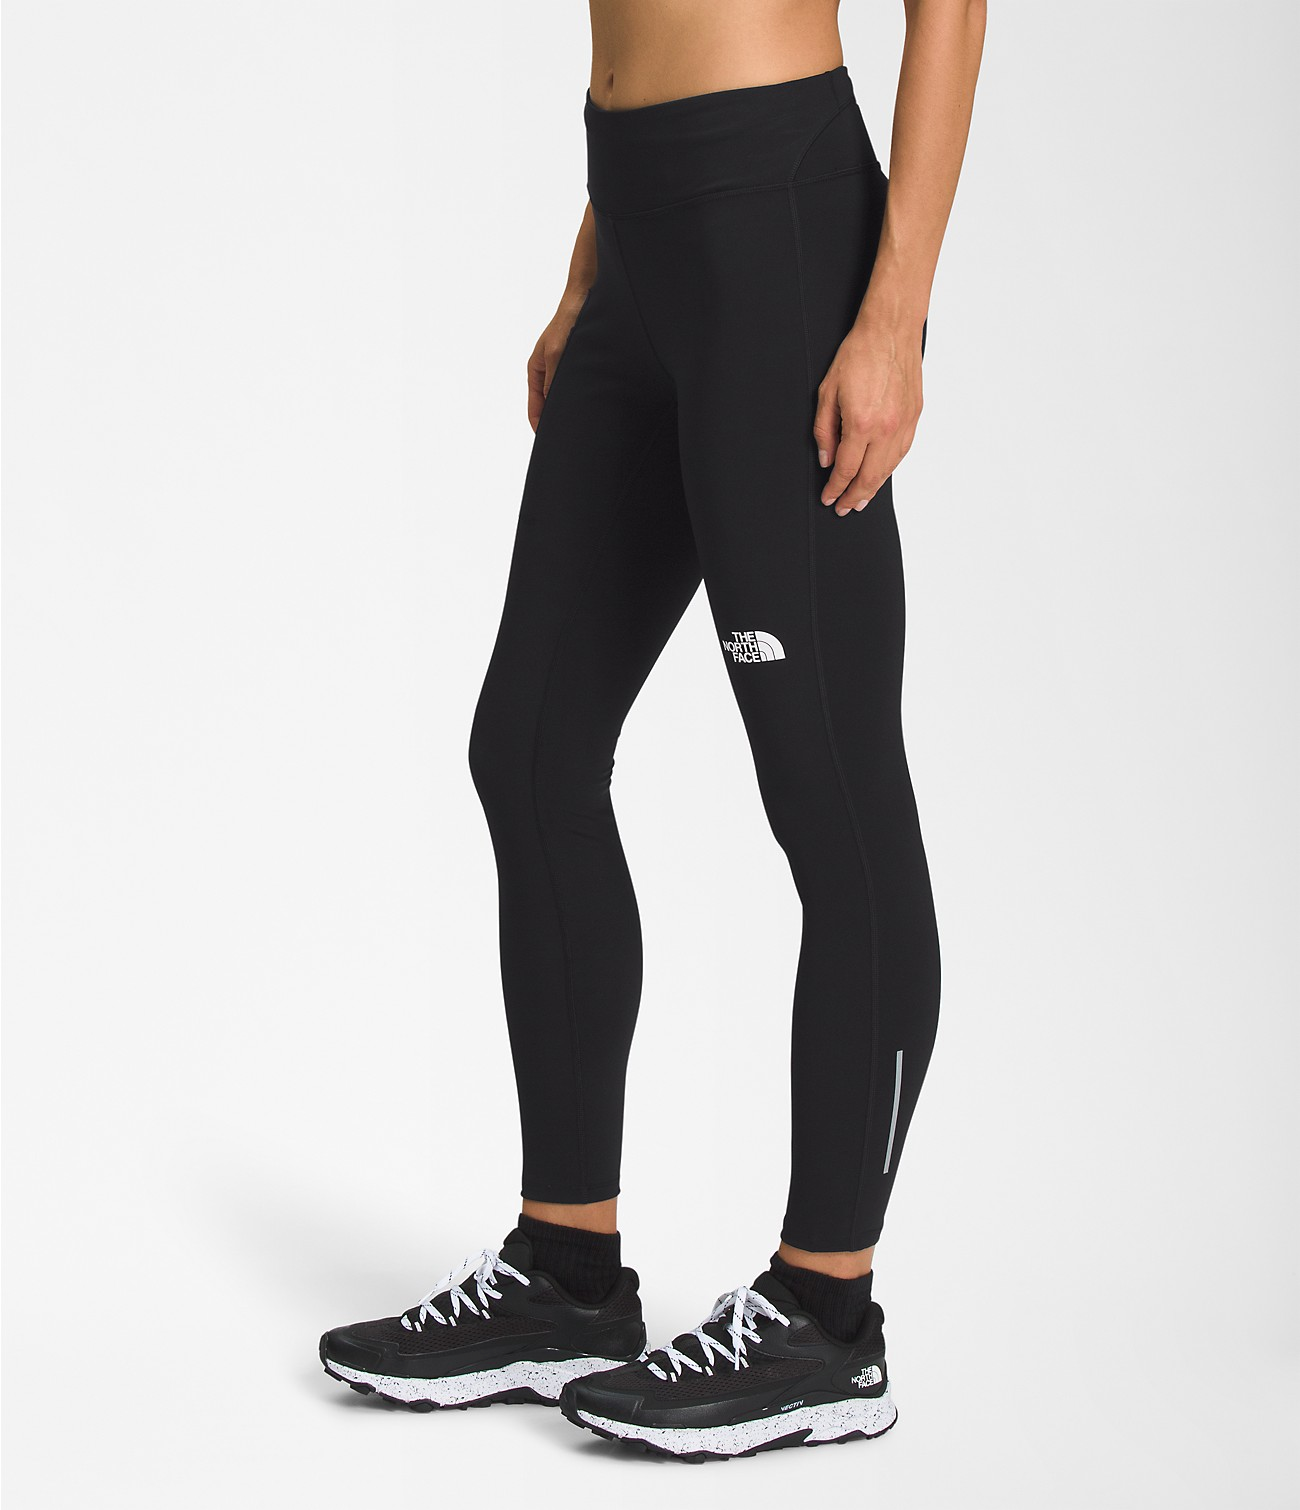 Heat Holders Women's Tights Black/XS : Clothing  